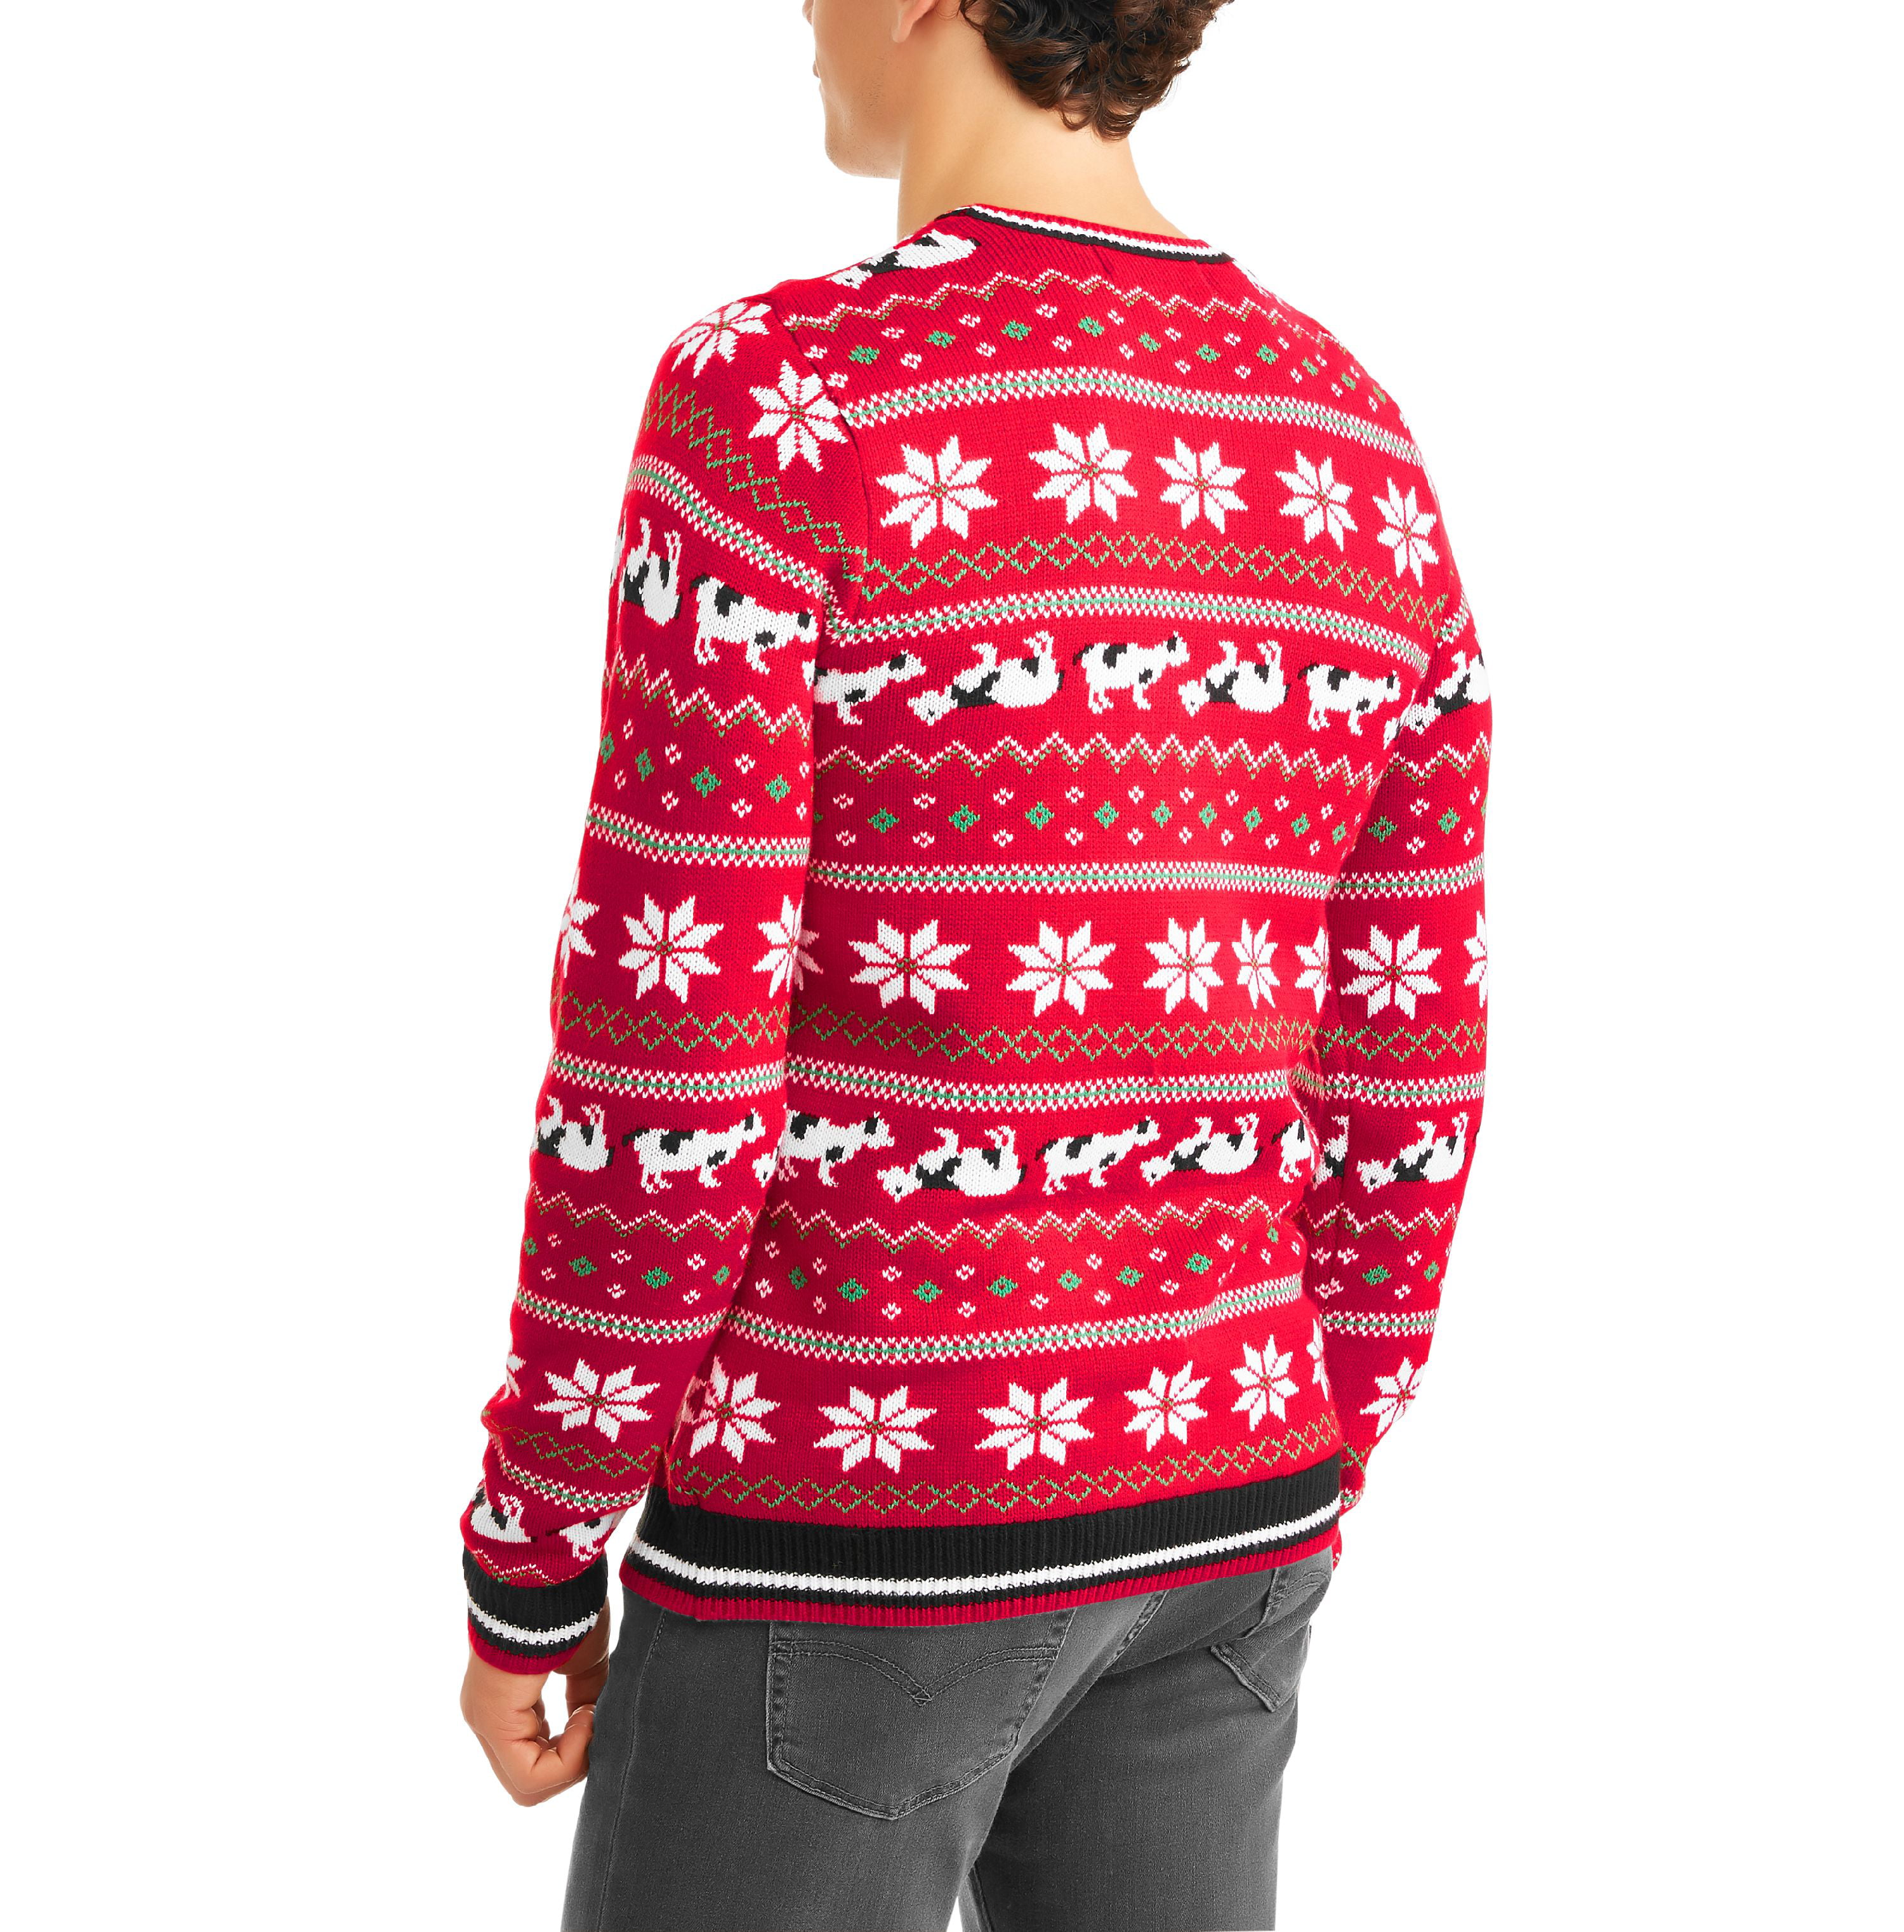 Generic Christmas Jumper Mens funny xmas sweatshirt gift present novelty